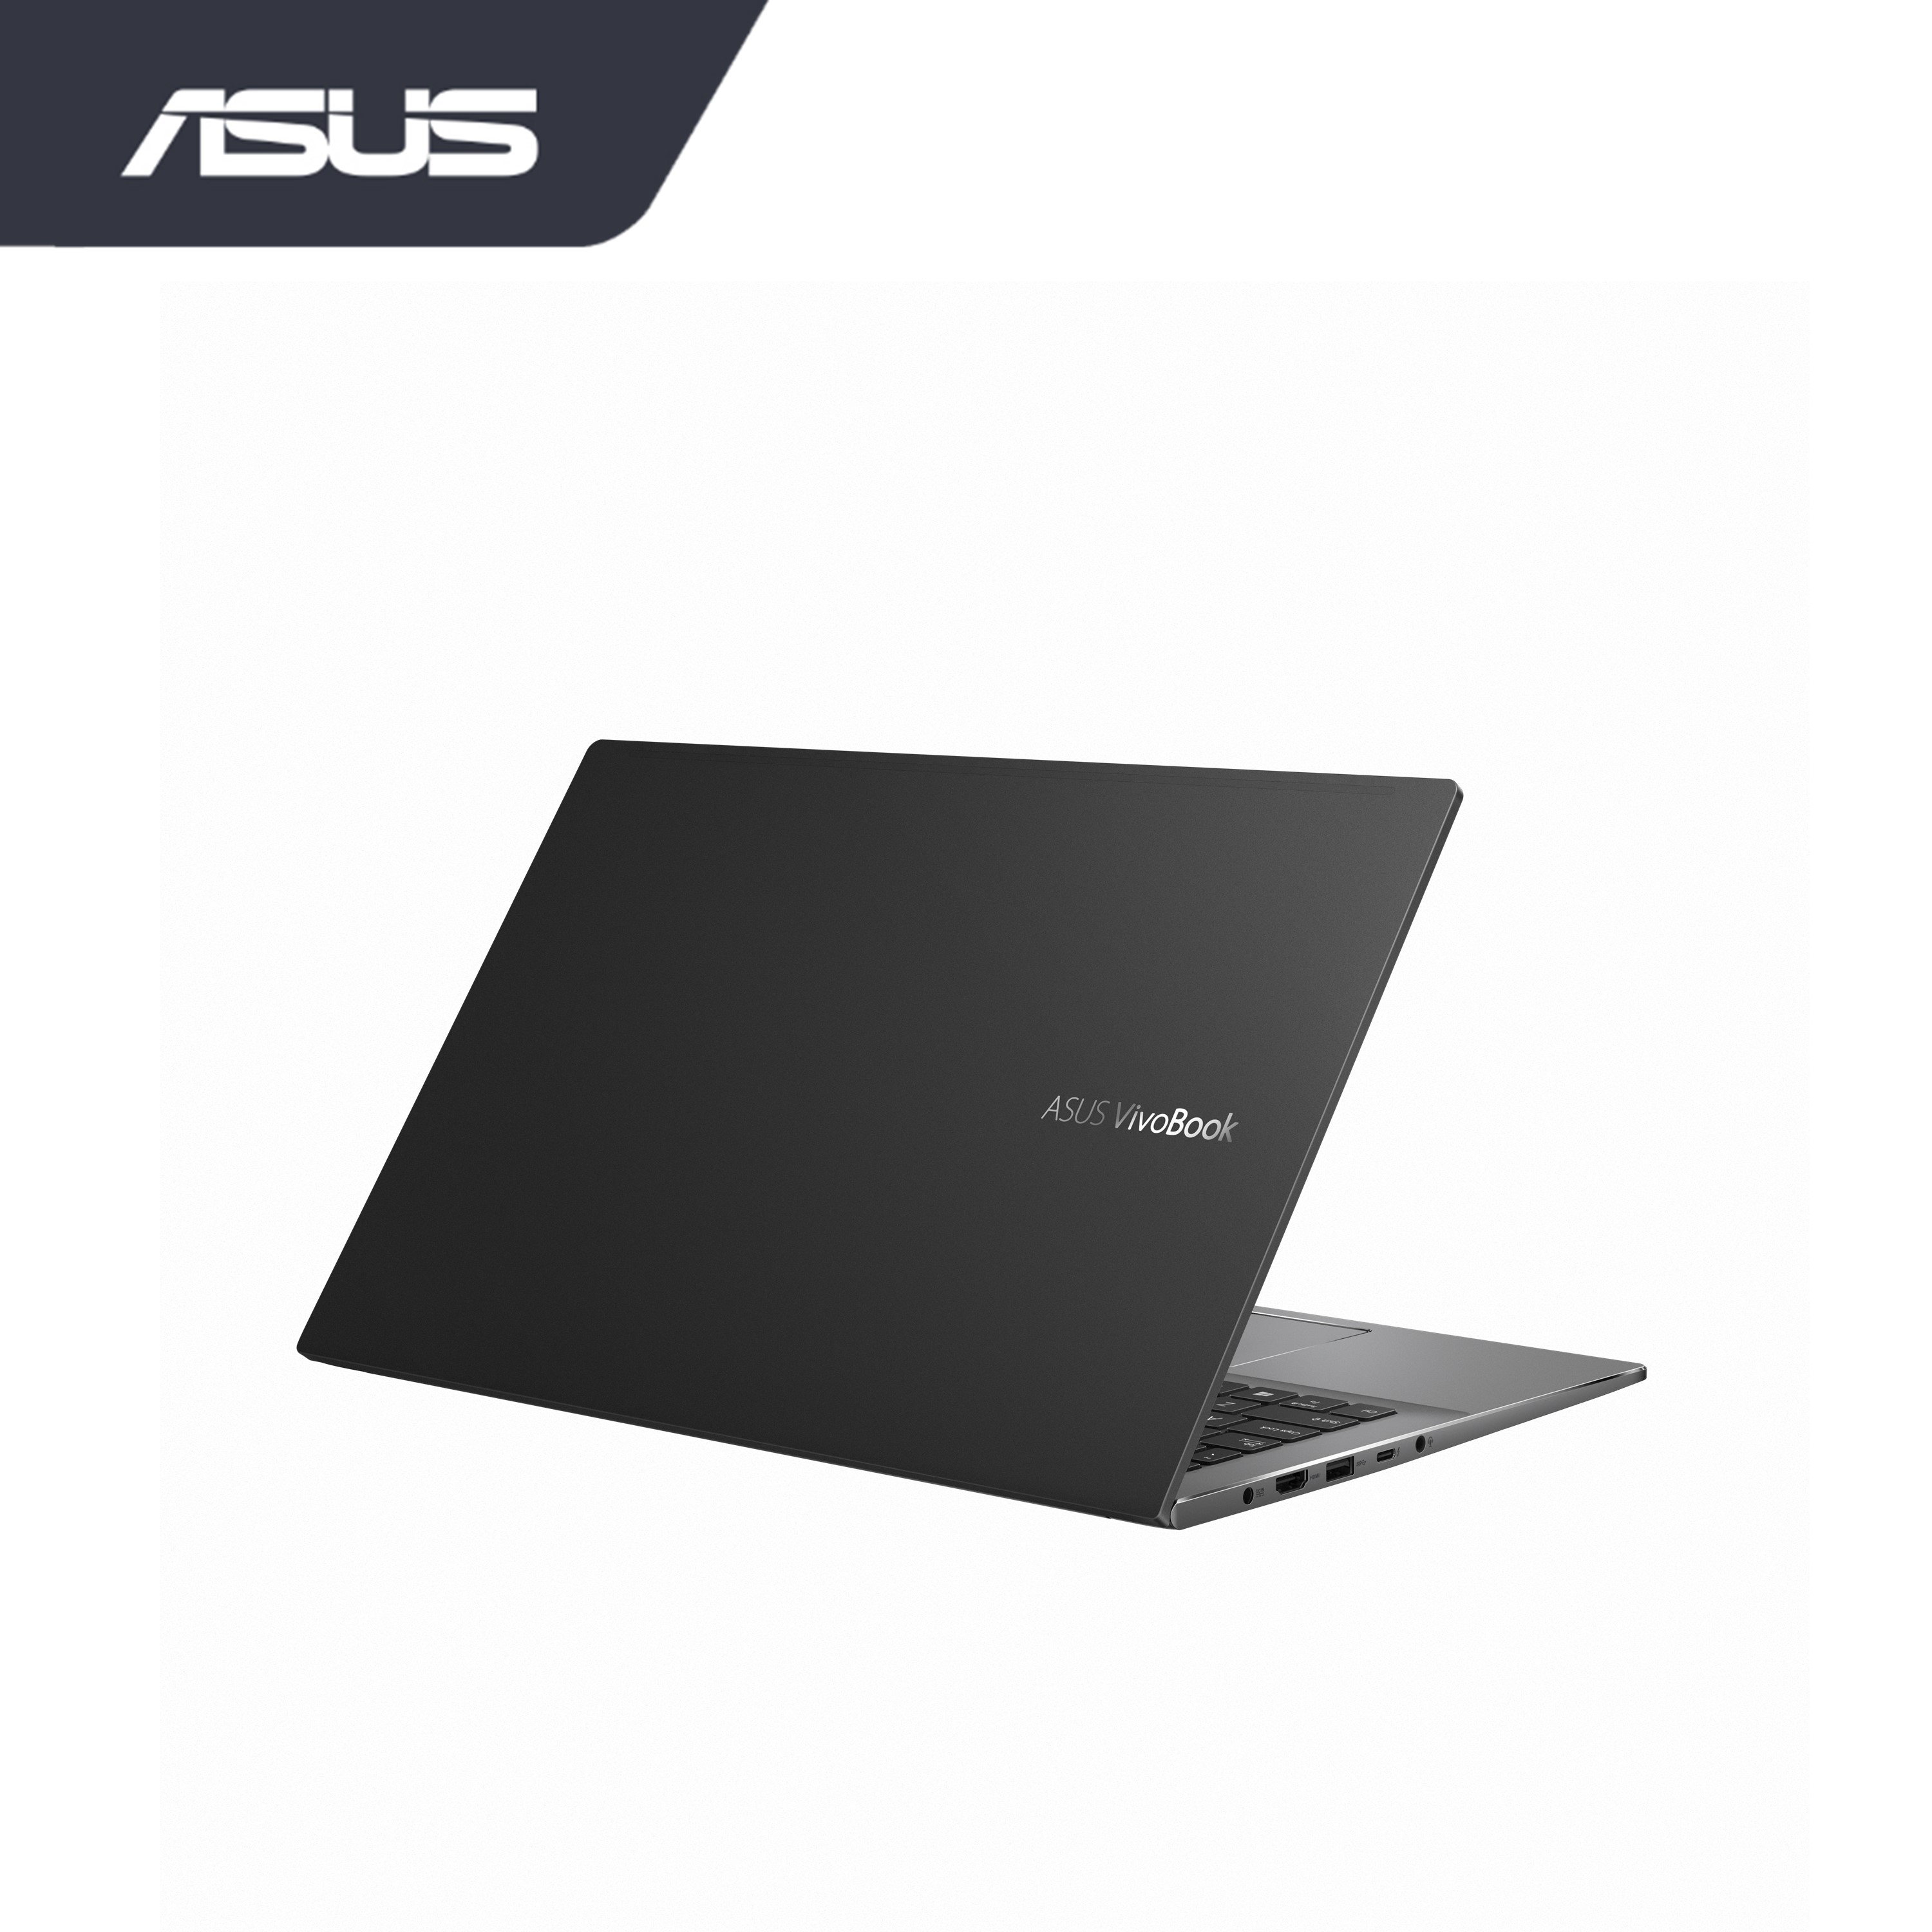 Asus Vivobook S S533e Abn603ws Laptop Indie Black I7 1165g7 8gb Ram